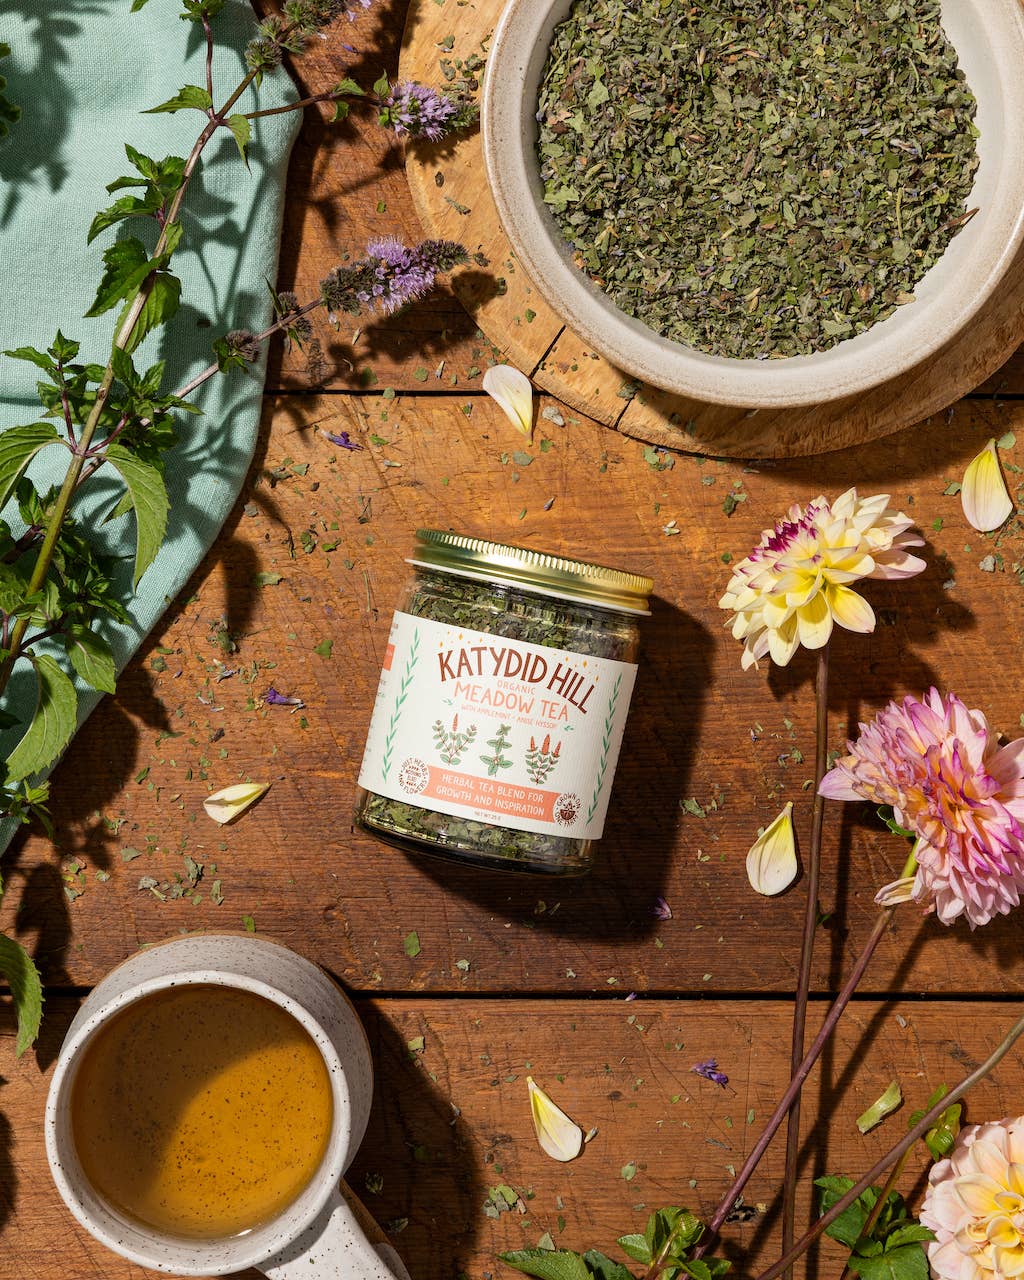 Katydid Hill Farm Meadow Tea - Herbal tea for Growth & Inspiration